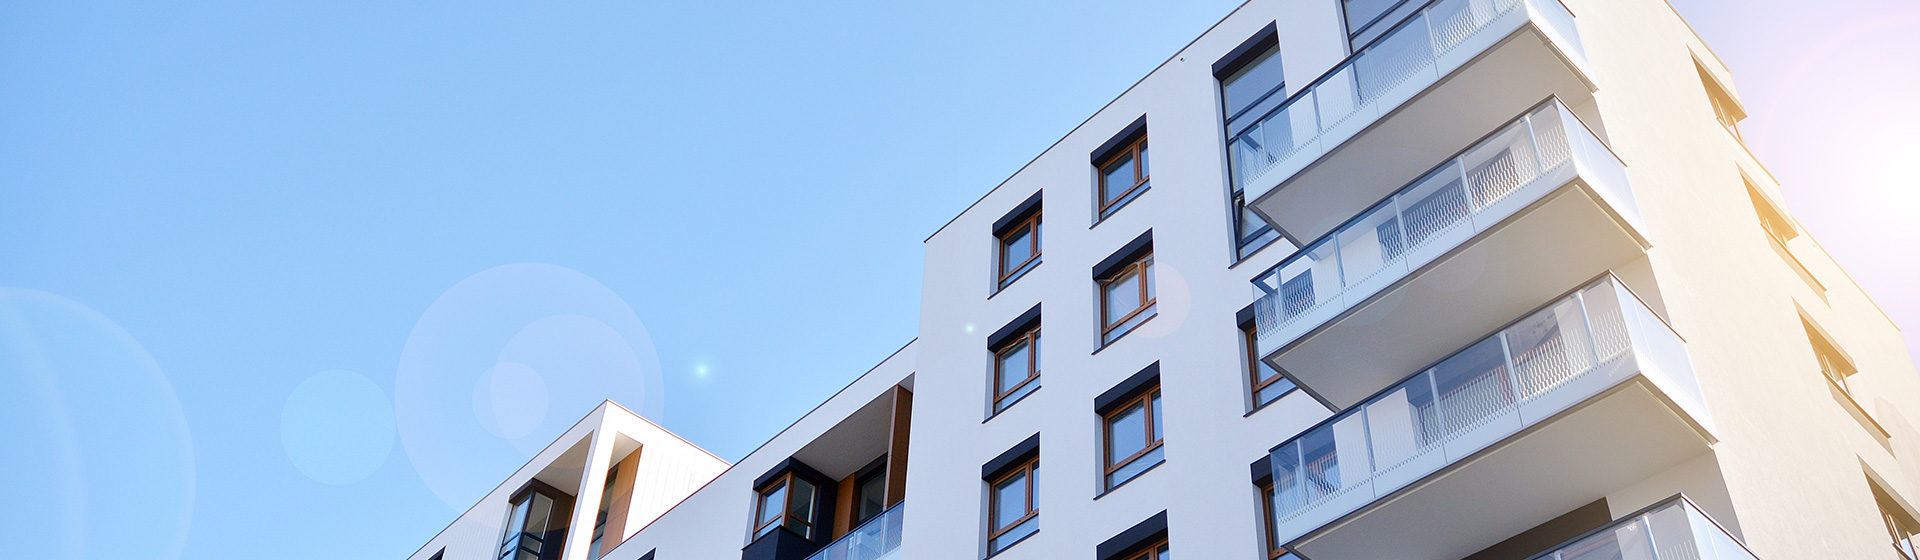 Moderne Mehrfamilienhäuser mit Balkonen unter blauem Himmel – Evaluation inveni consulting